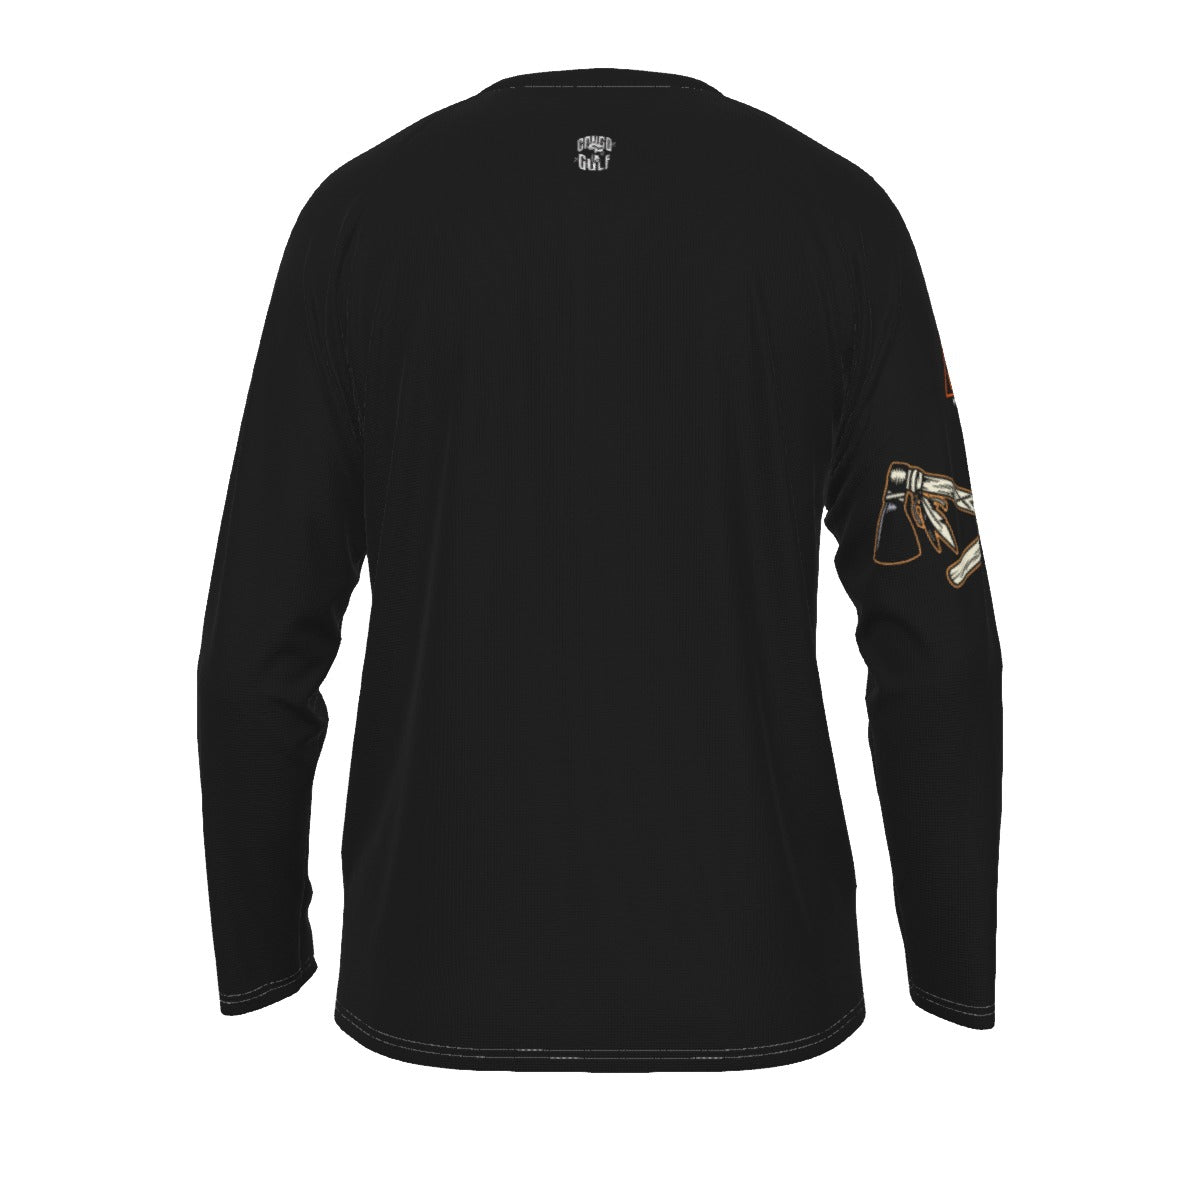 All-Over Print Men's Long Sleeve T-shirt With Raglan Sleeve